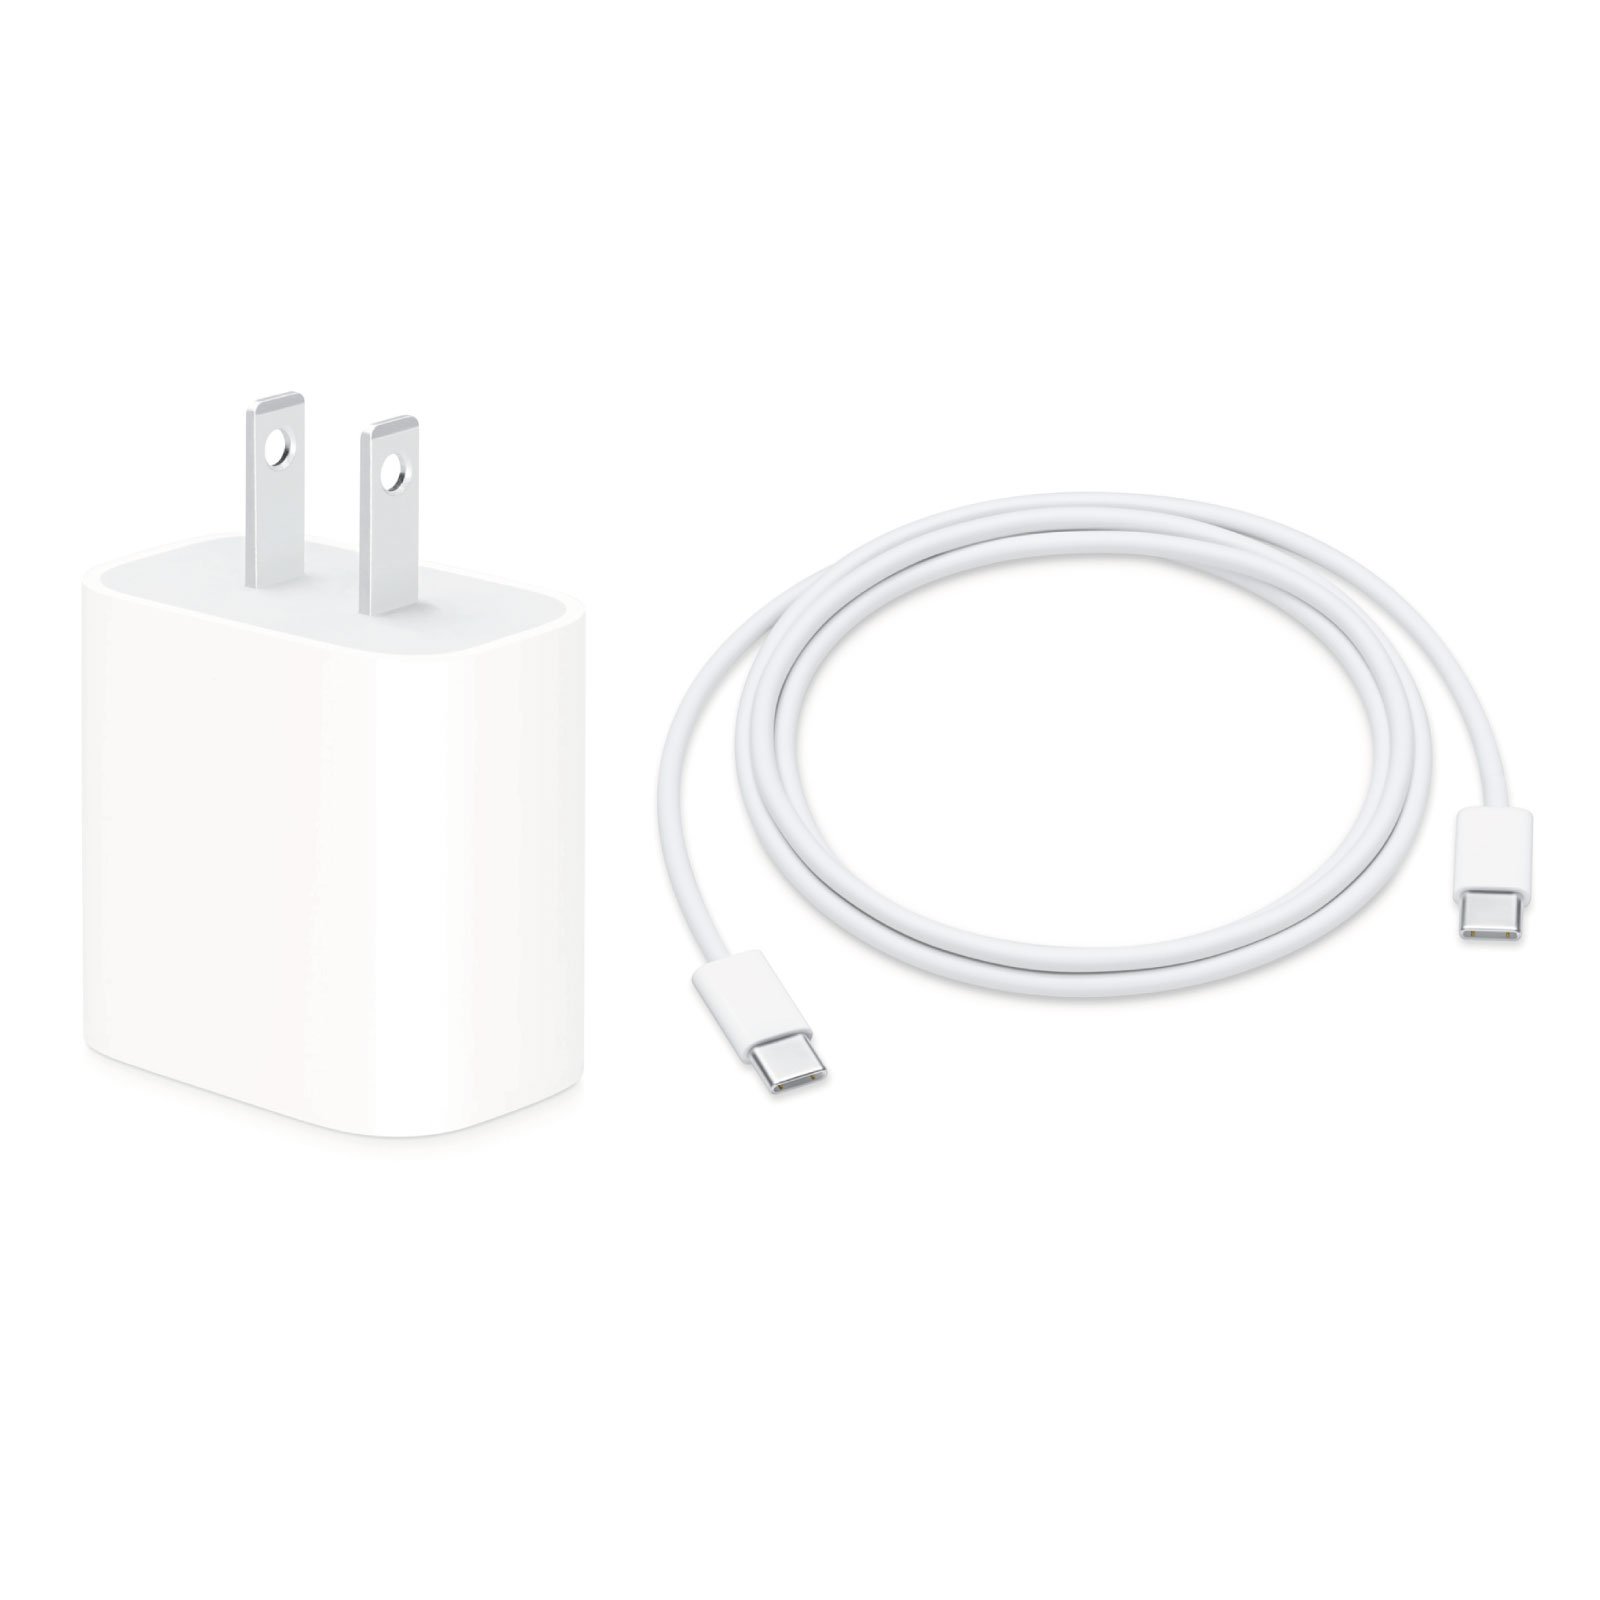 Combo Cargador 20w + Cable Usb C Carga Rápida Para iPhone Color Blanco